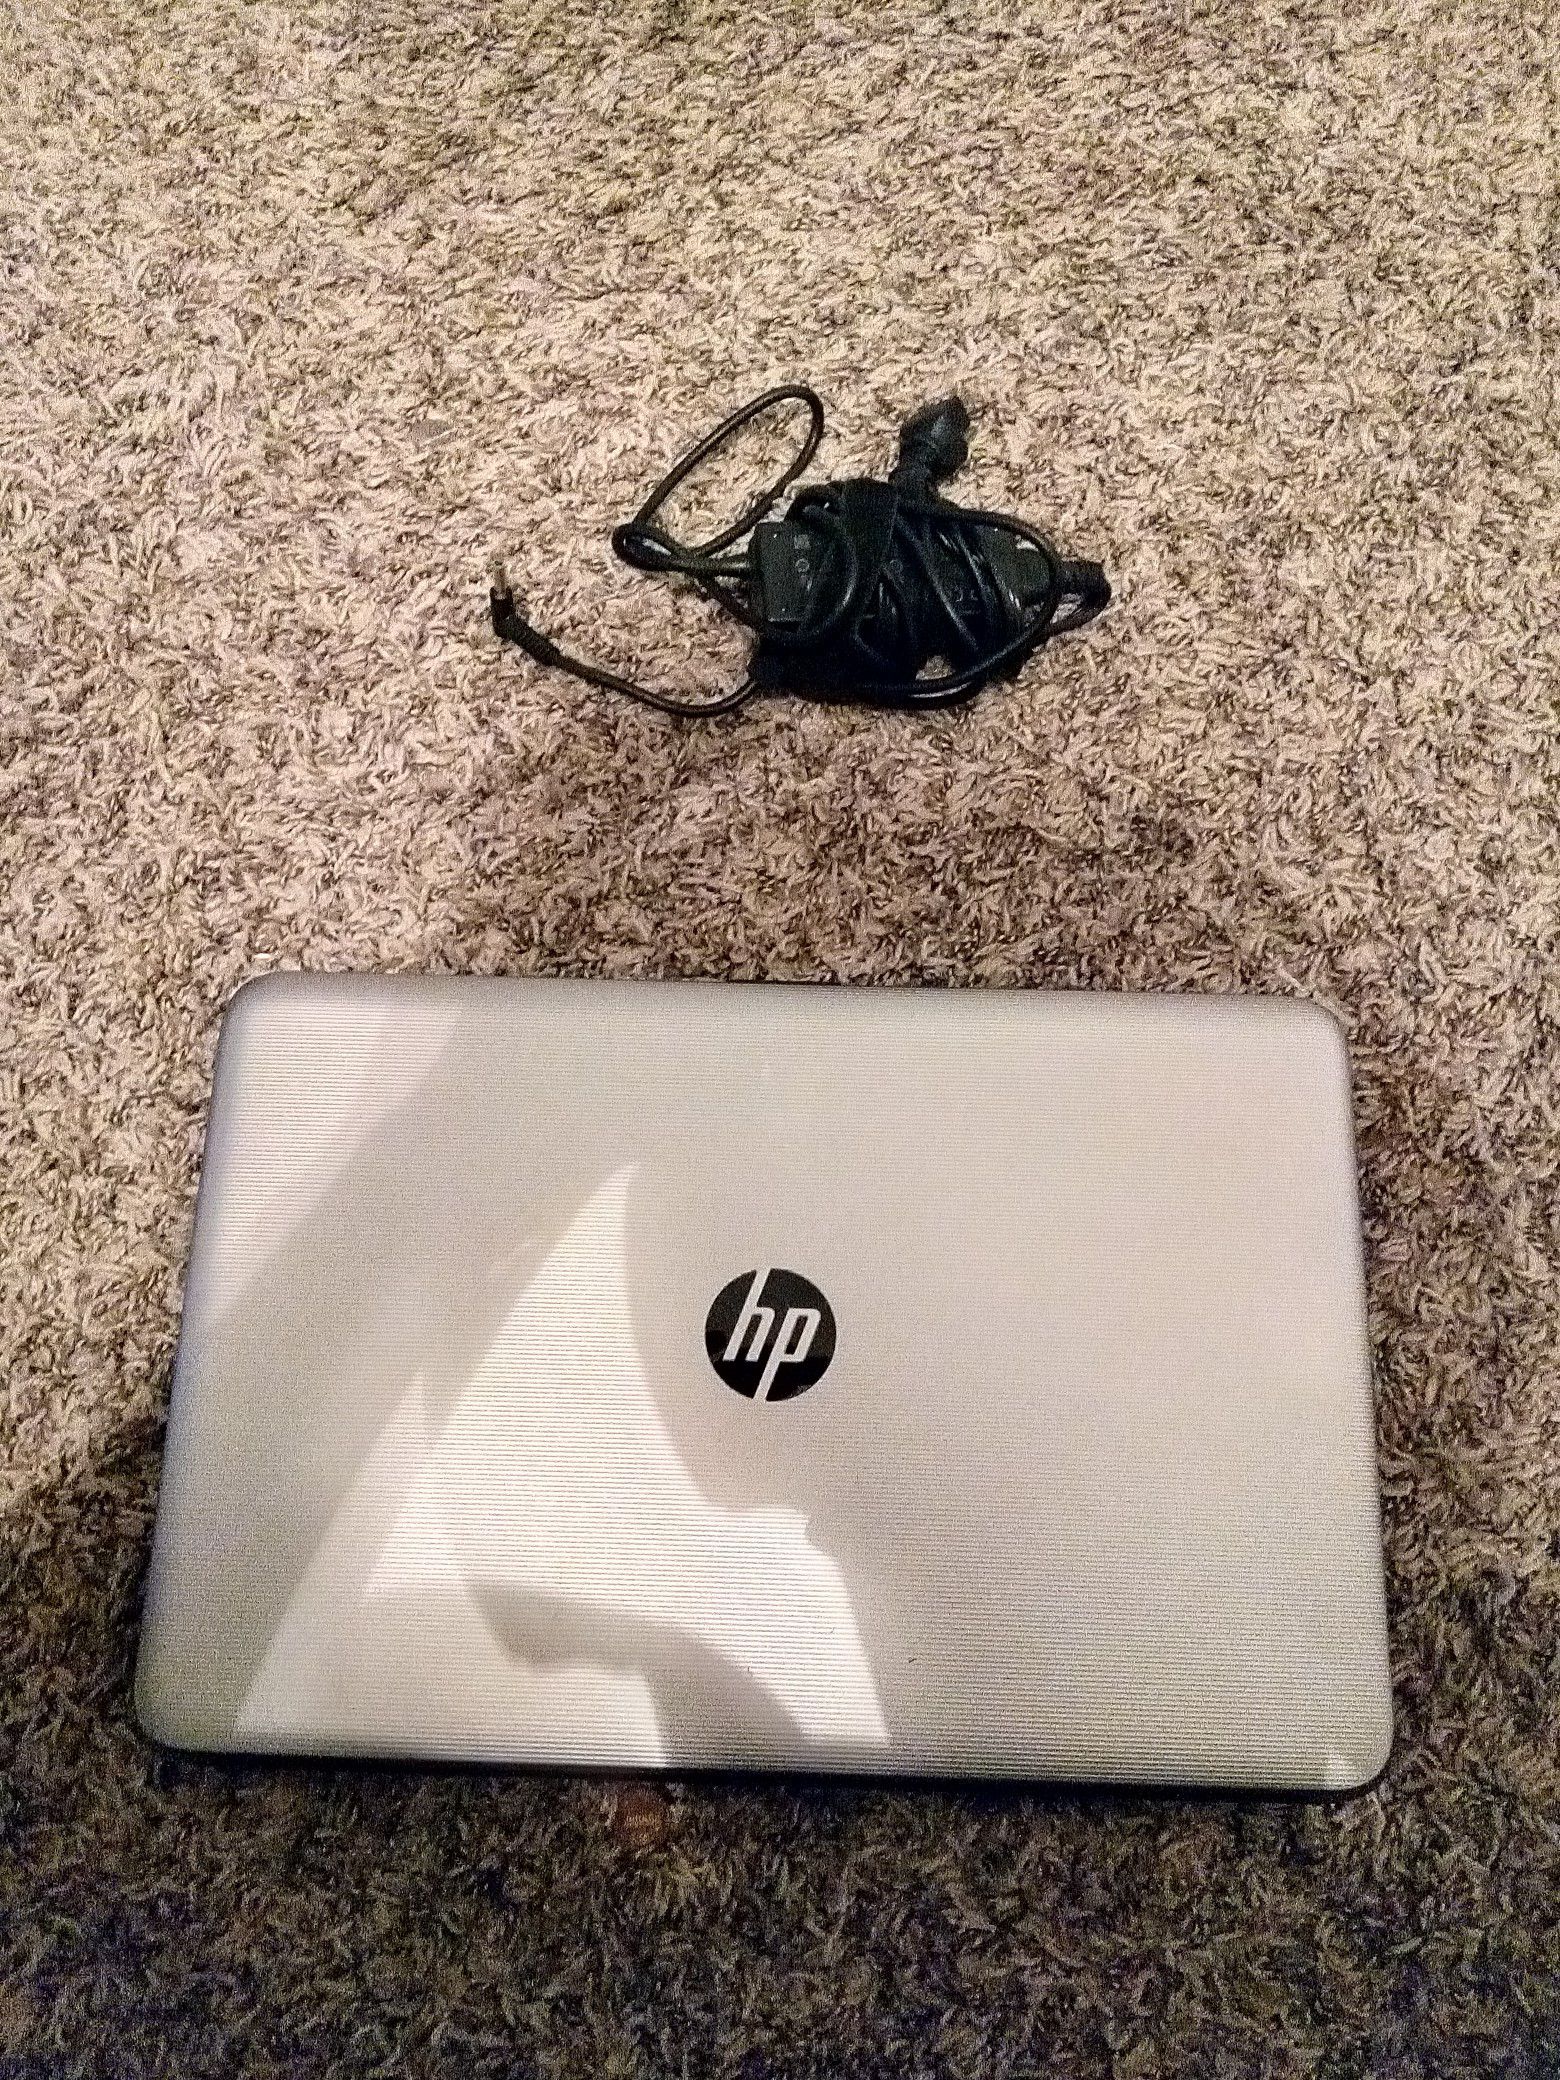 Lighty Used HP Laptop Notebook